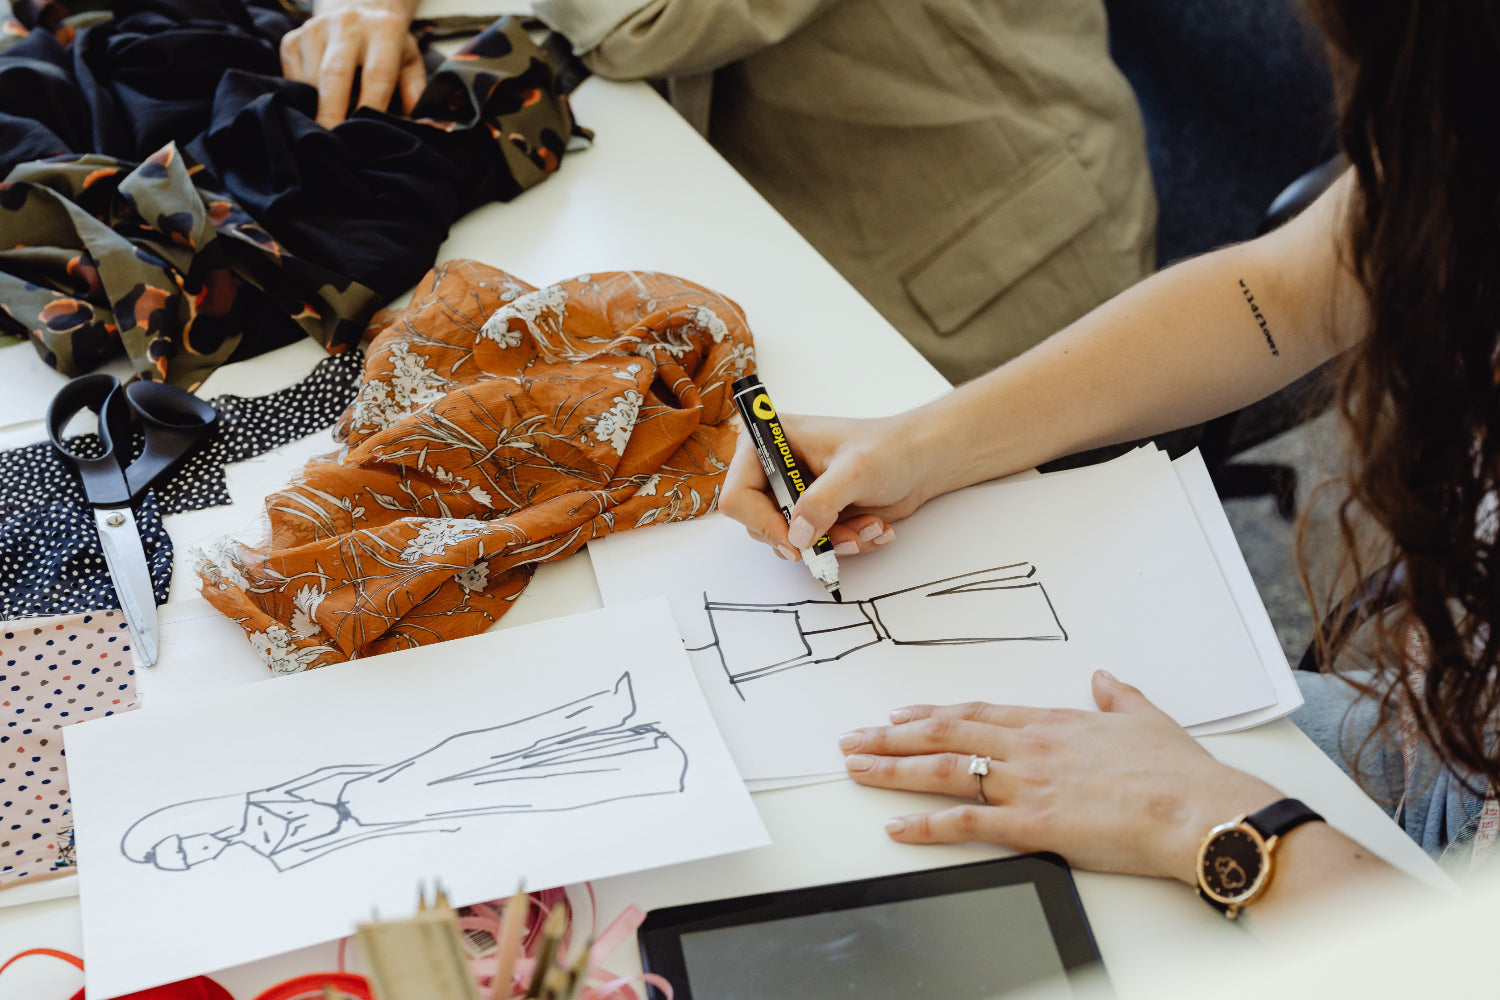 A fashion designer sketches some clothing ideas